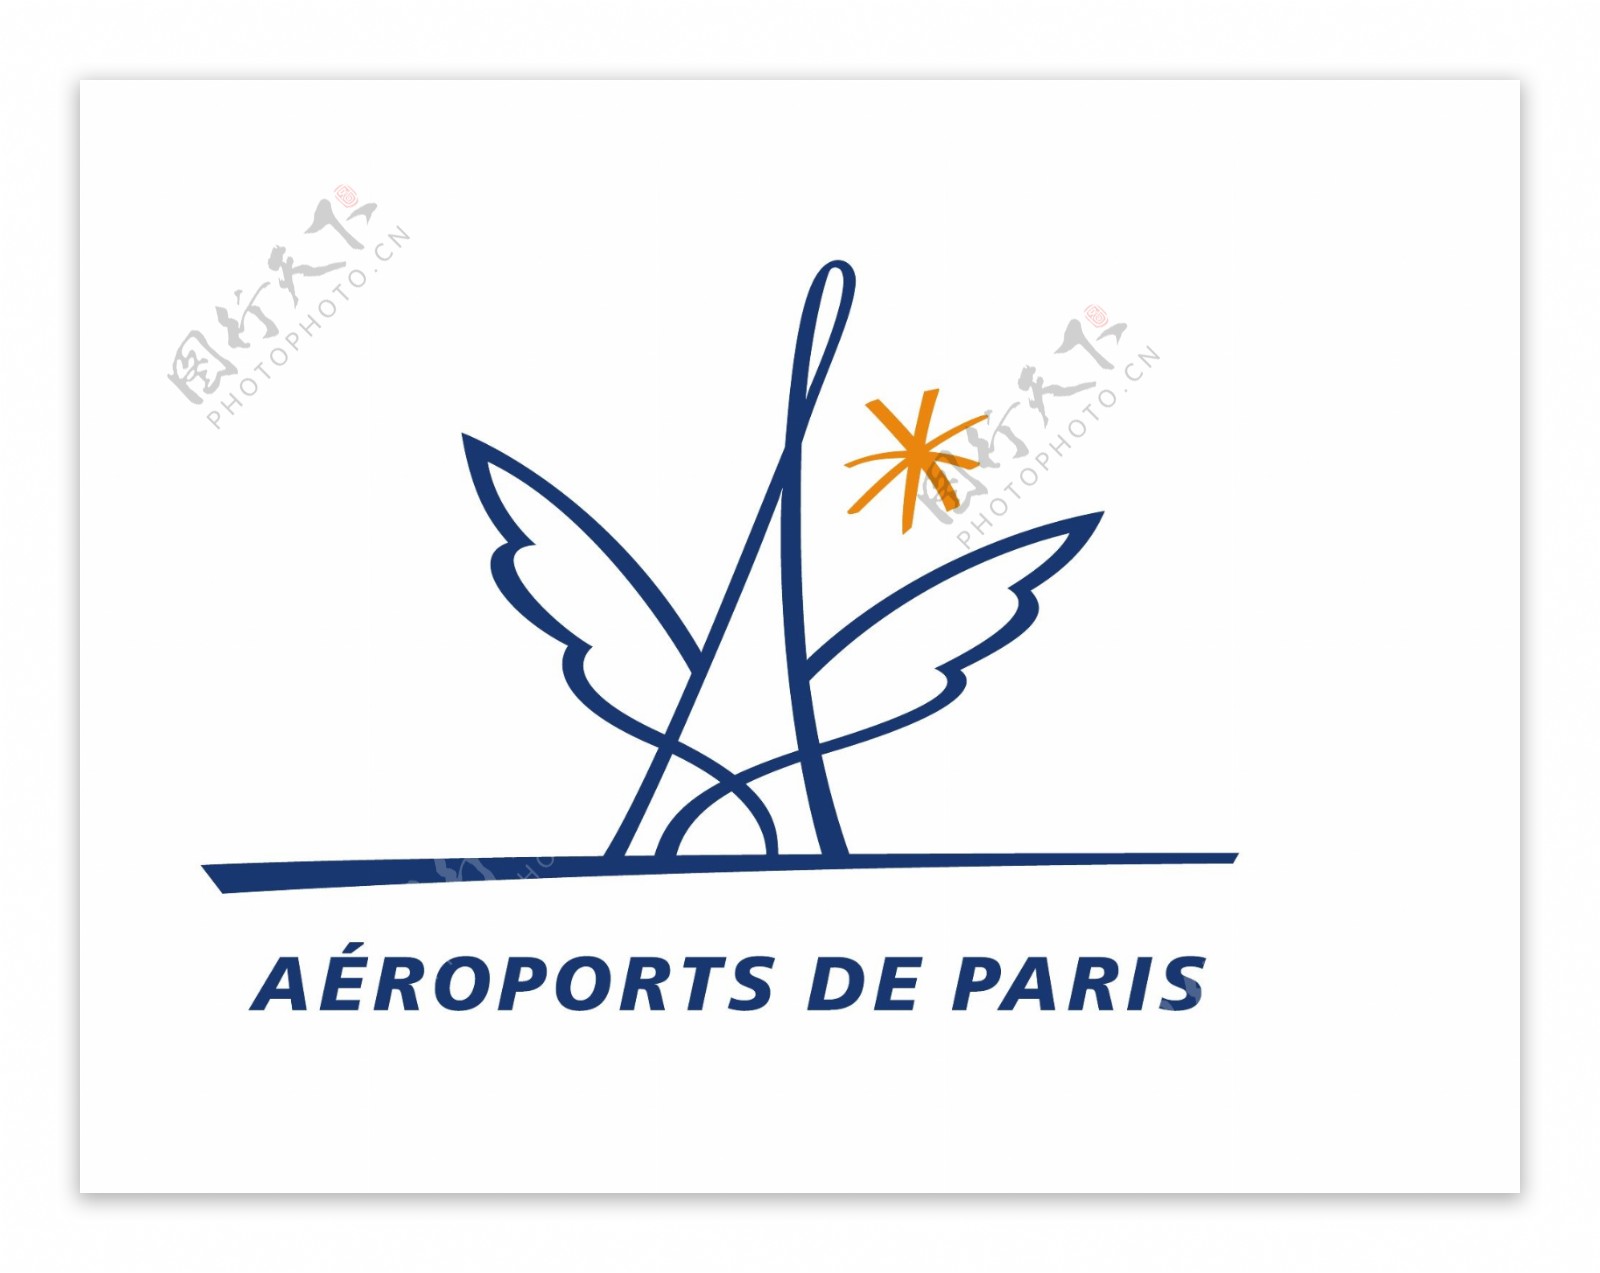 AeroportsdeParisADPlogo设计欣赏AeroportsdeParisADP航空公司标志下载标志设计欣赏